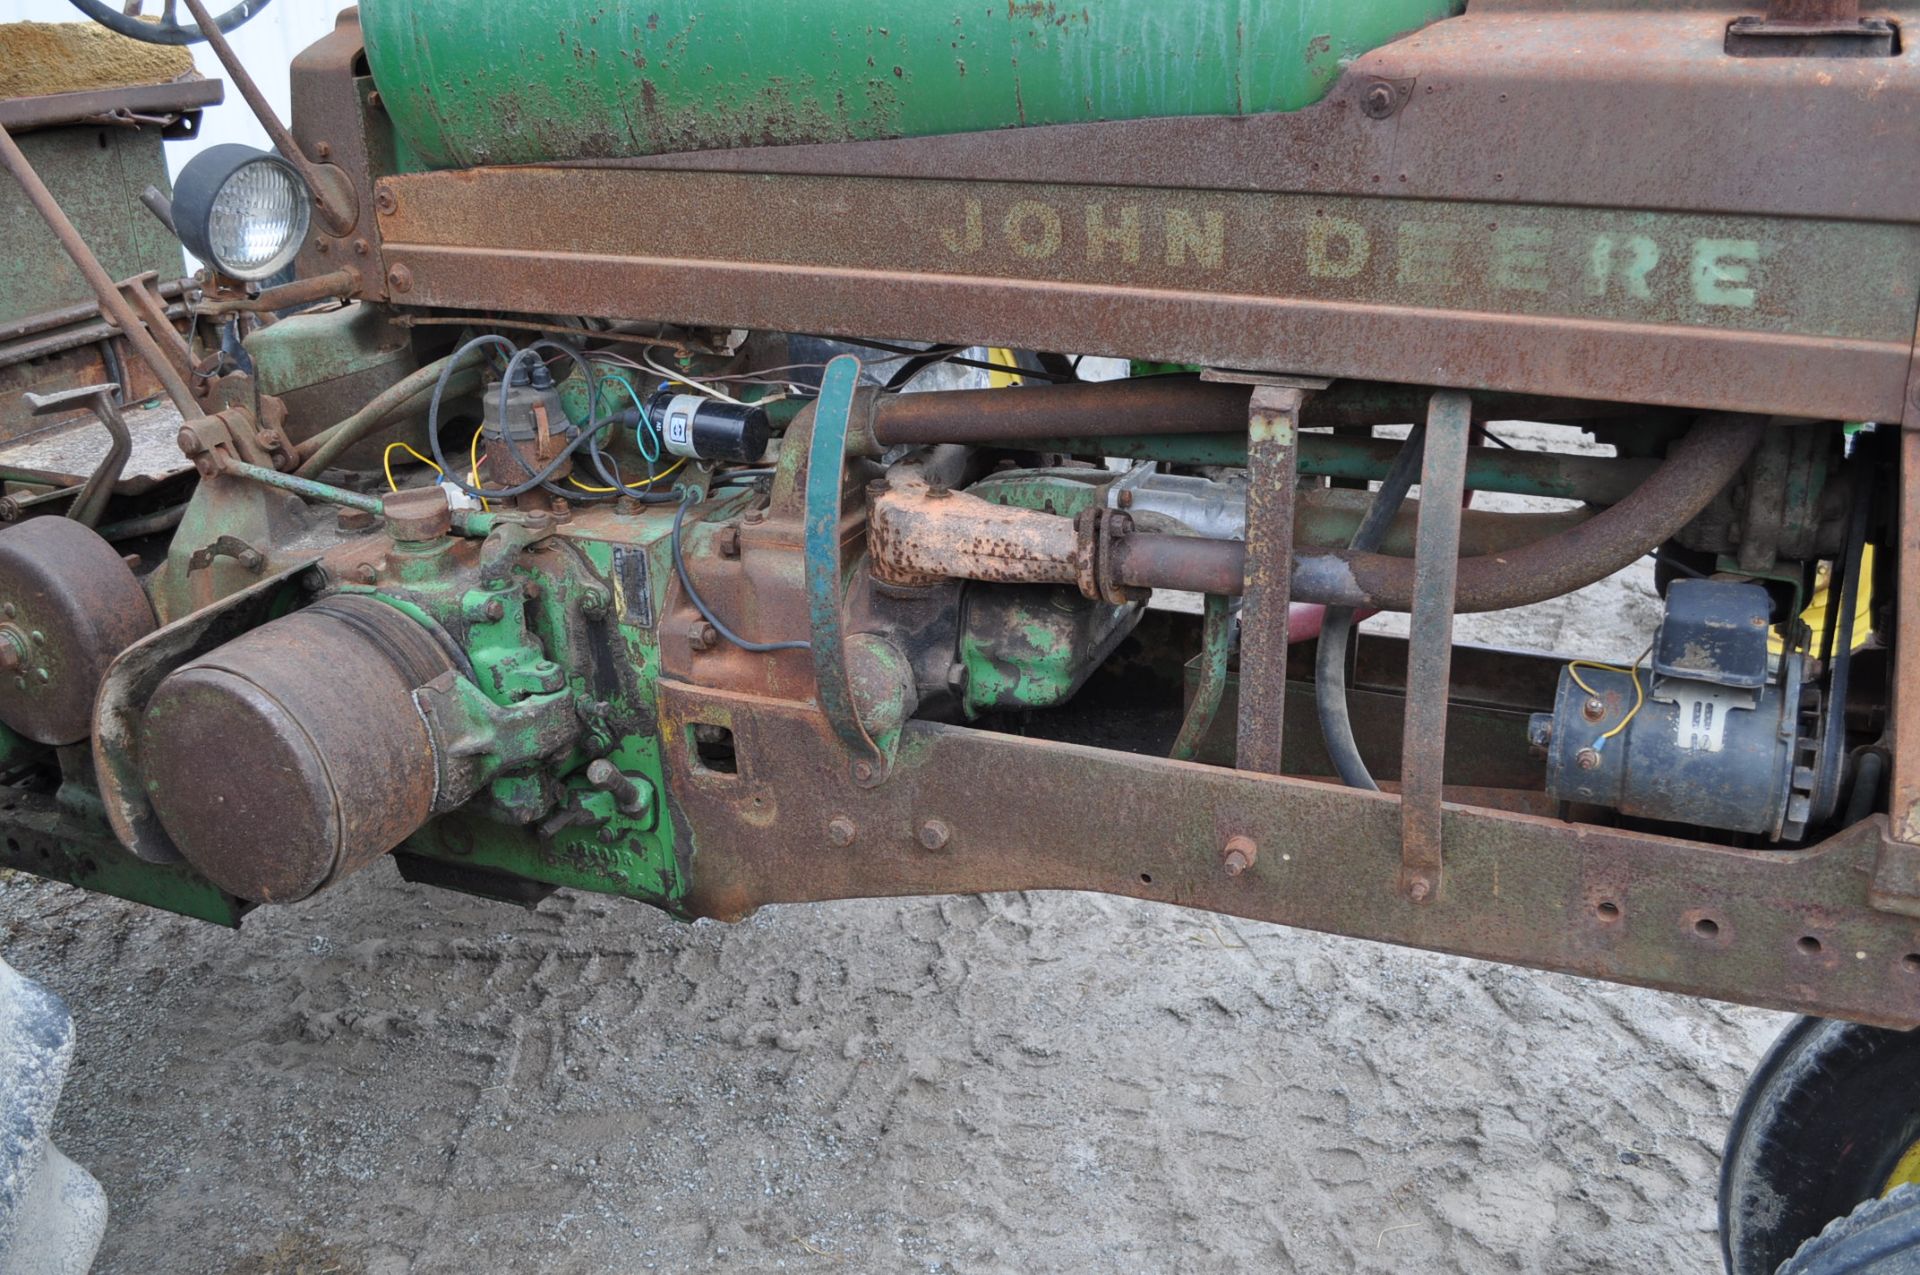 John Deere 520 tractor, LP, 13.6-12-36 rear tires, 6.00-19 front tires, narrow front, power steering - Image 12 of 12